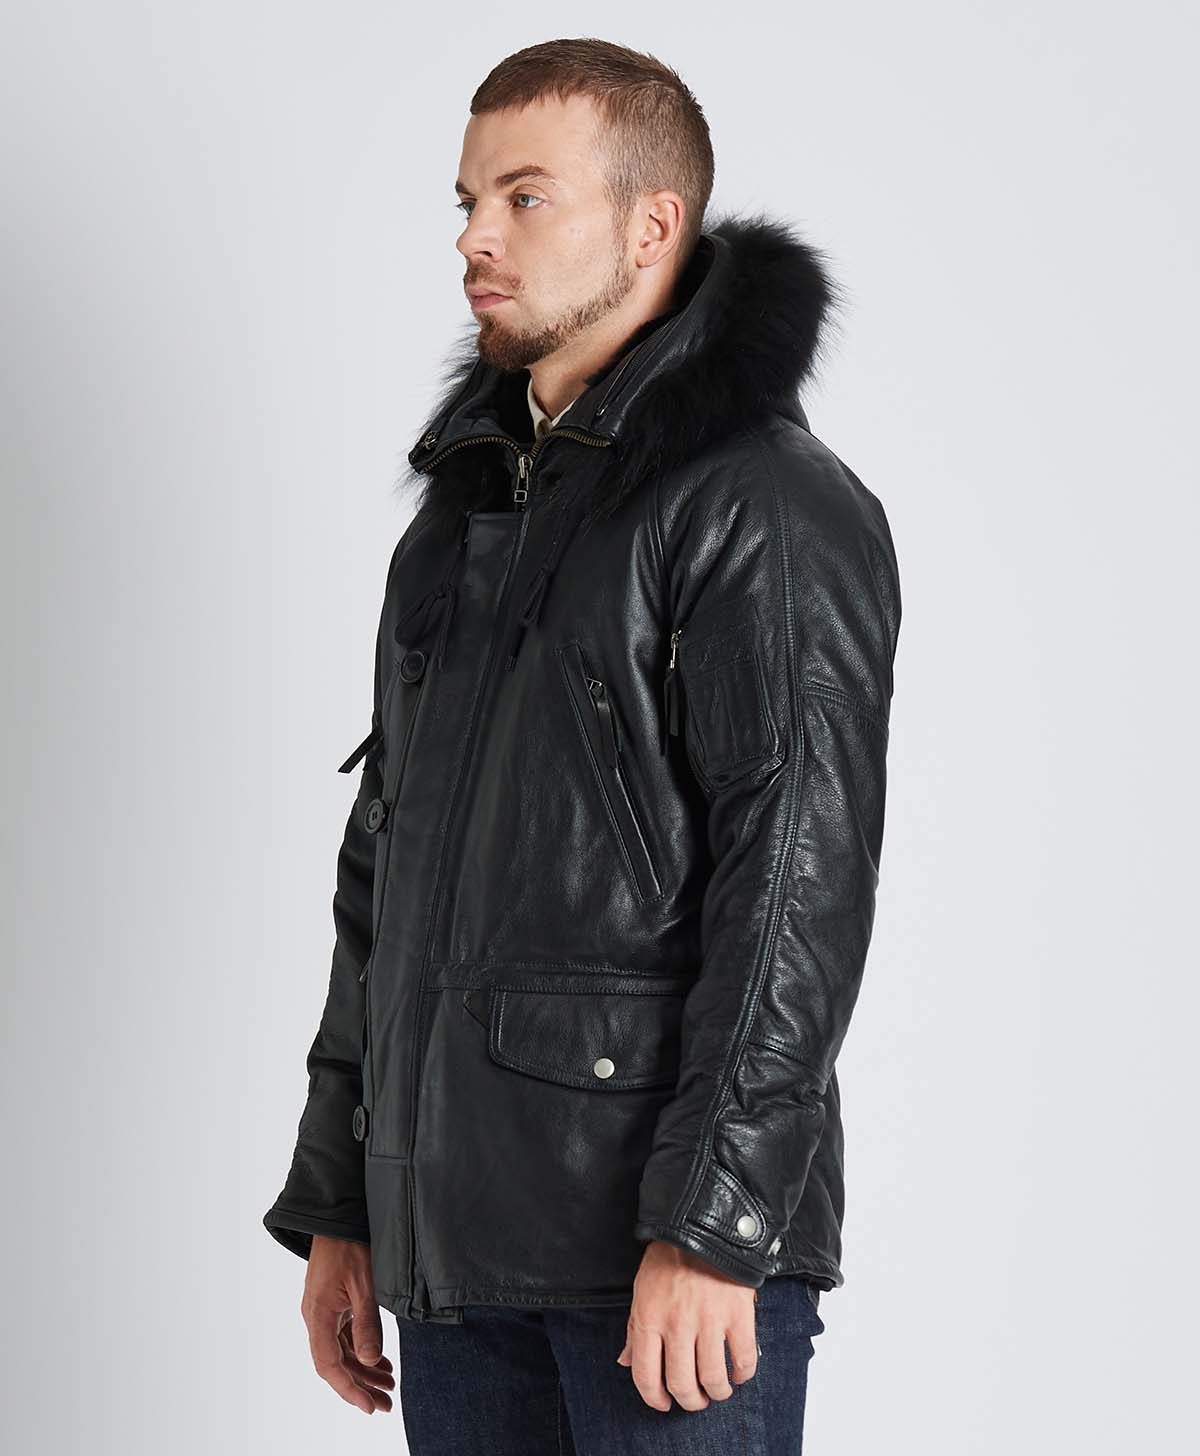 Leather jacket leather coat military | Kadoya official online shop 